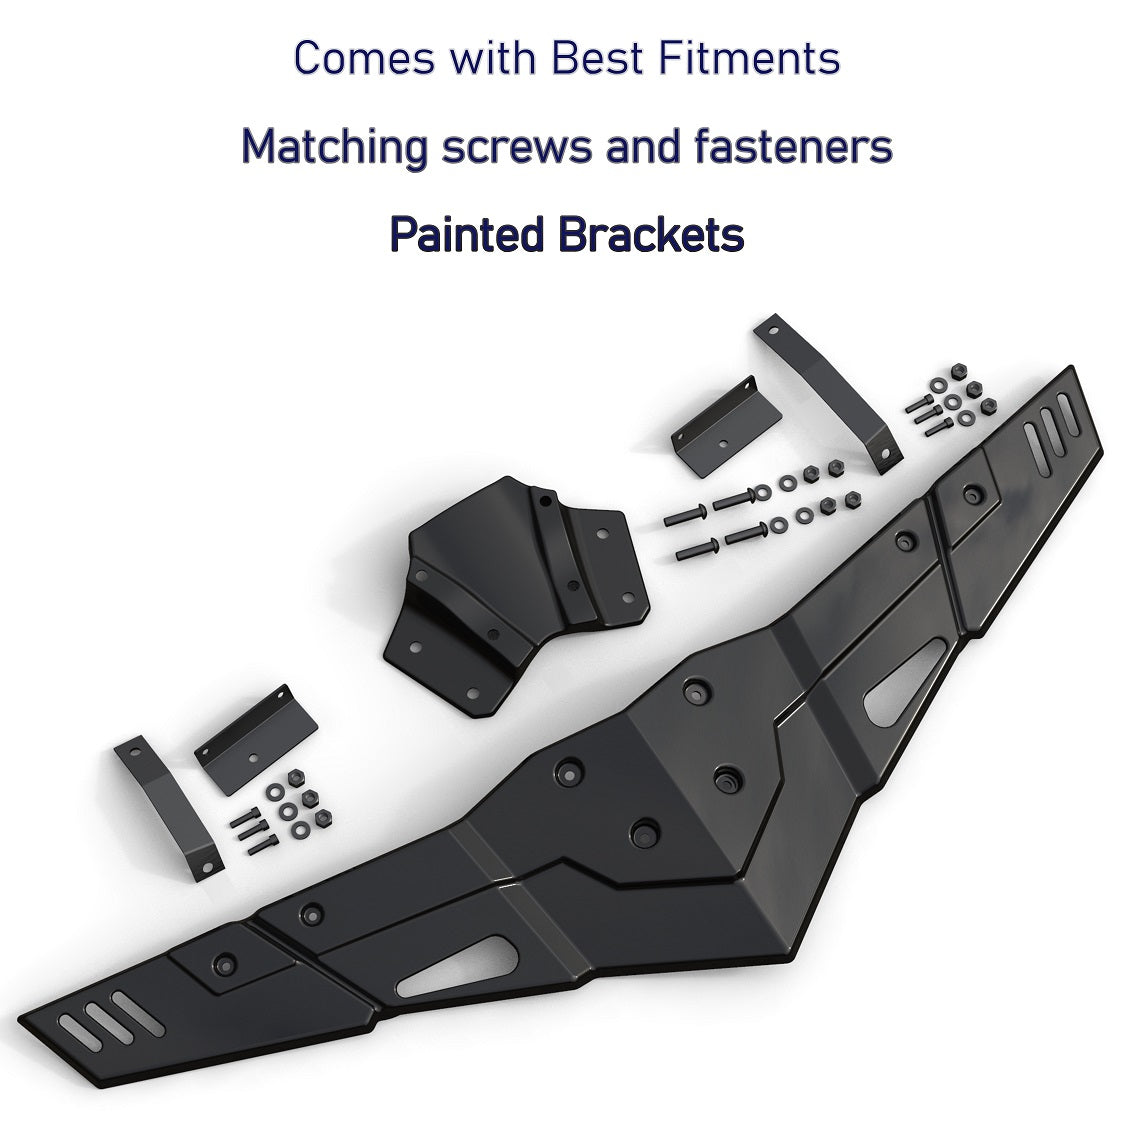 Yamaha MT15 Accessories | Modified Yamaha MT 15 | Best MT15 Modification | Buffalo Mask for Yamaha MT15 | Saiga Parts for MT15 V1 / V2